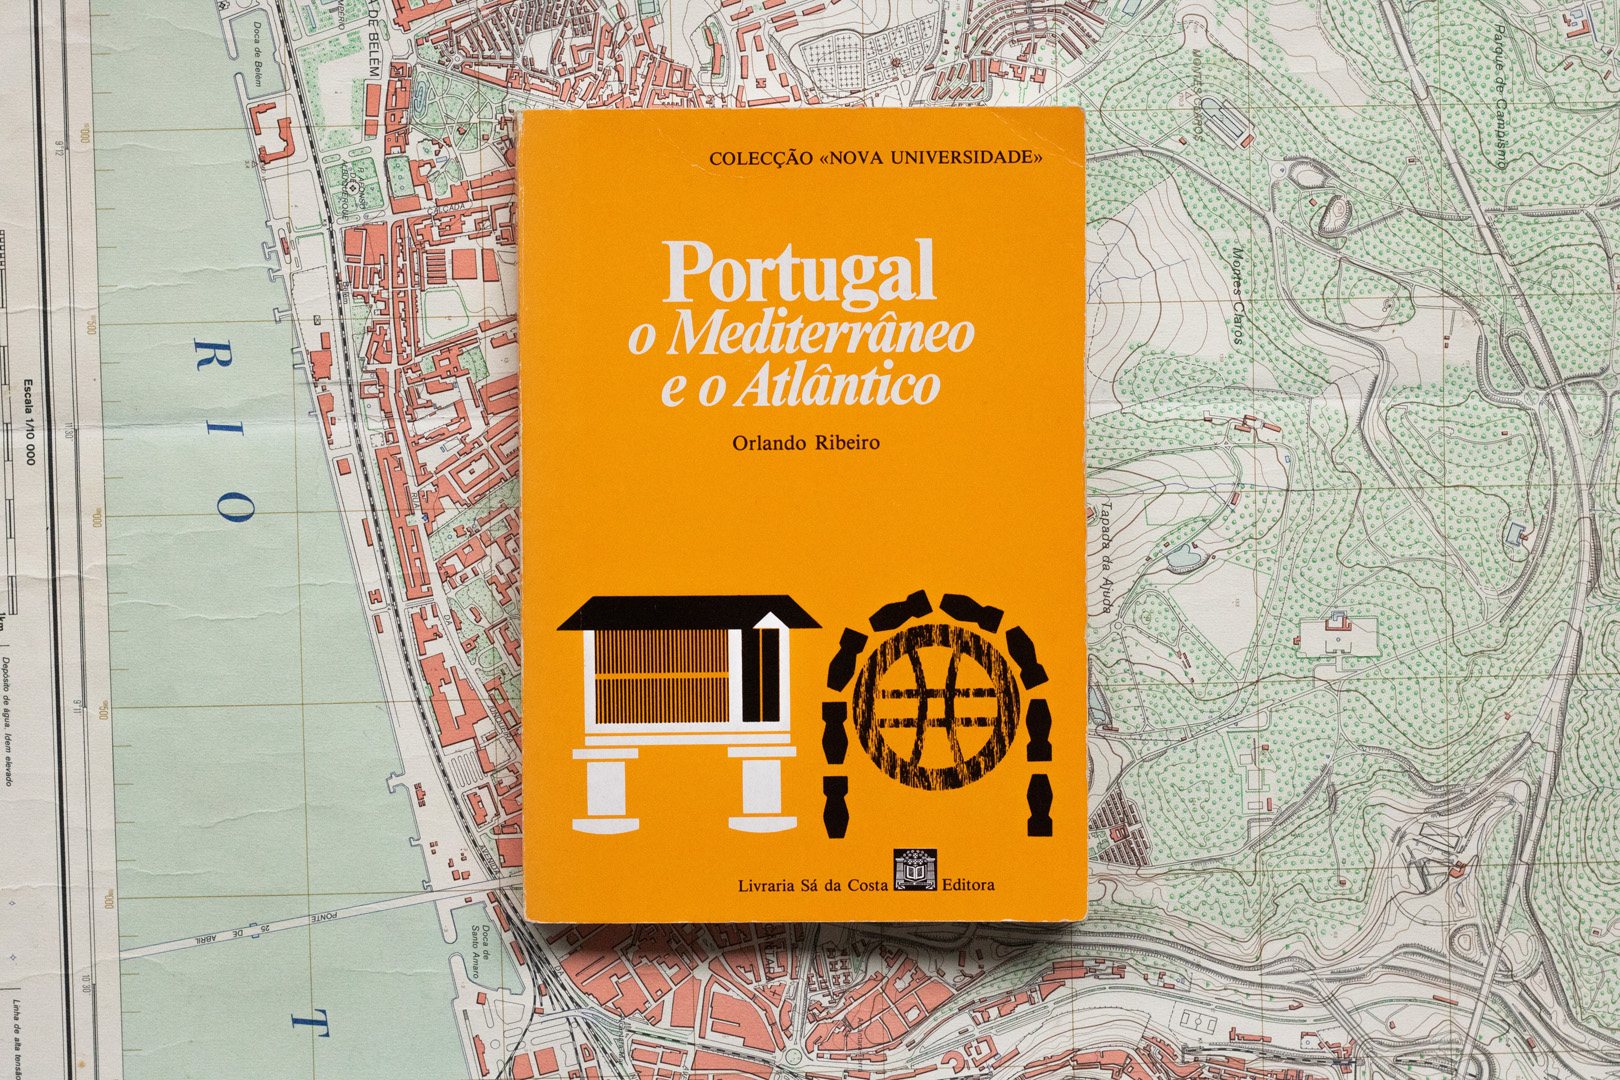 Portugal o Mediterrâneo e o Atlântico